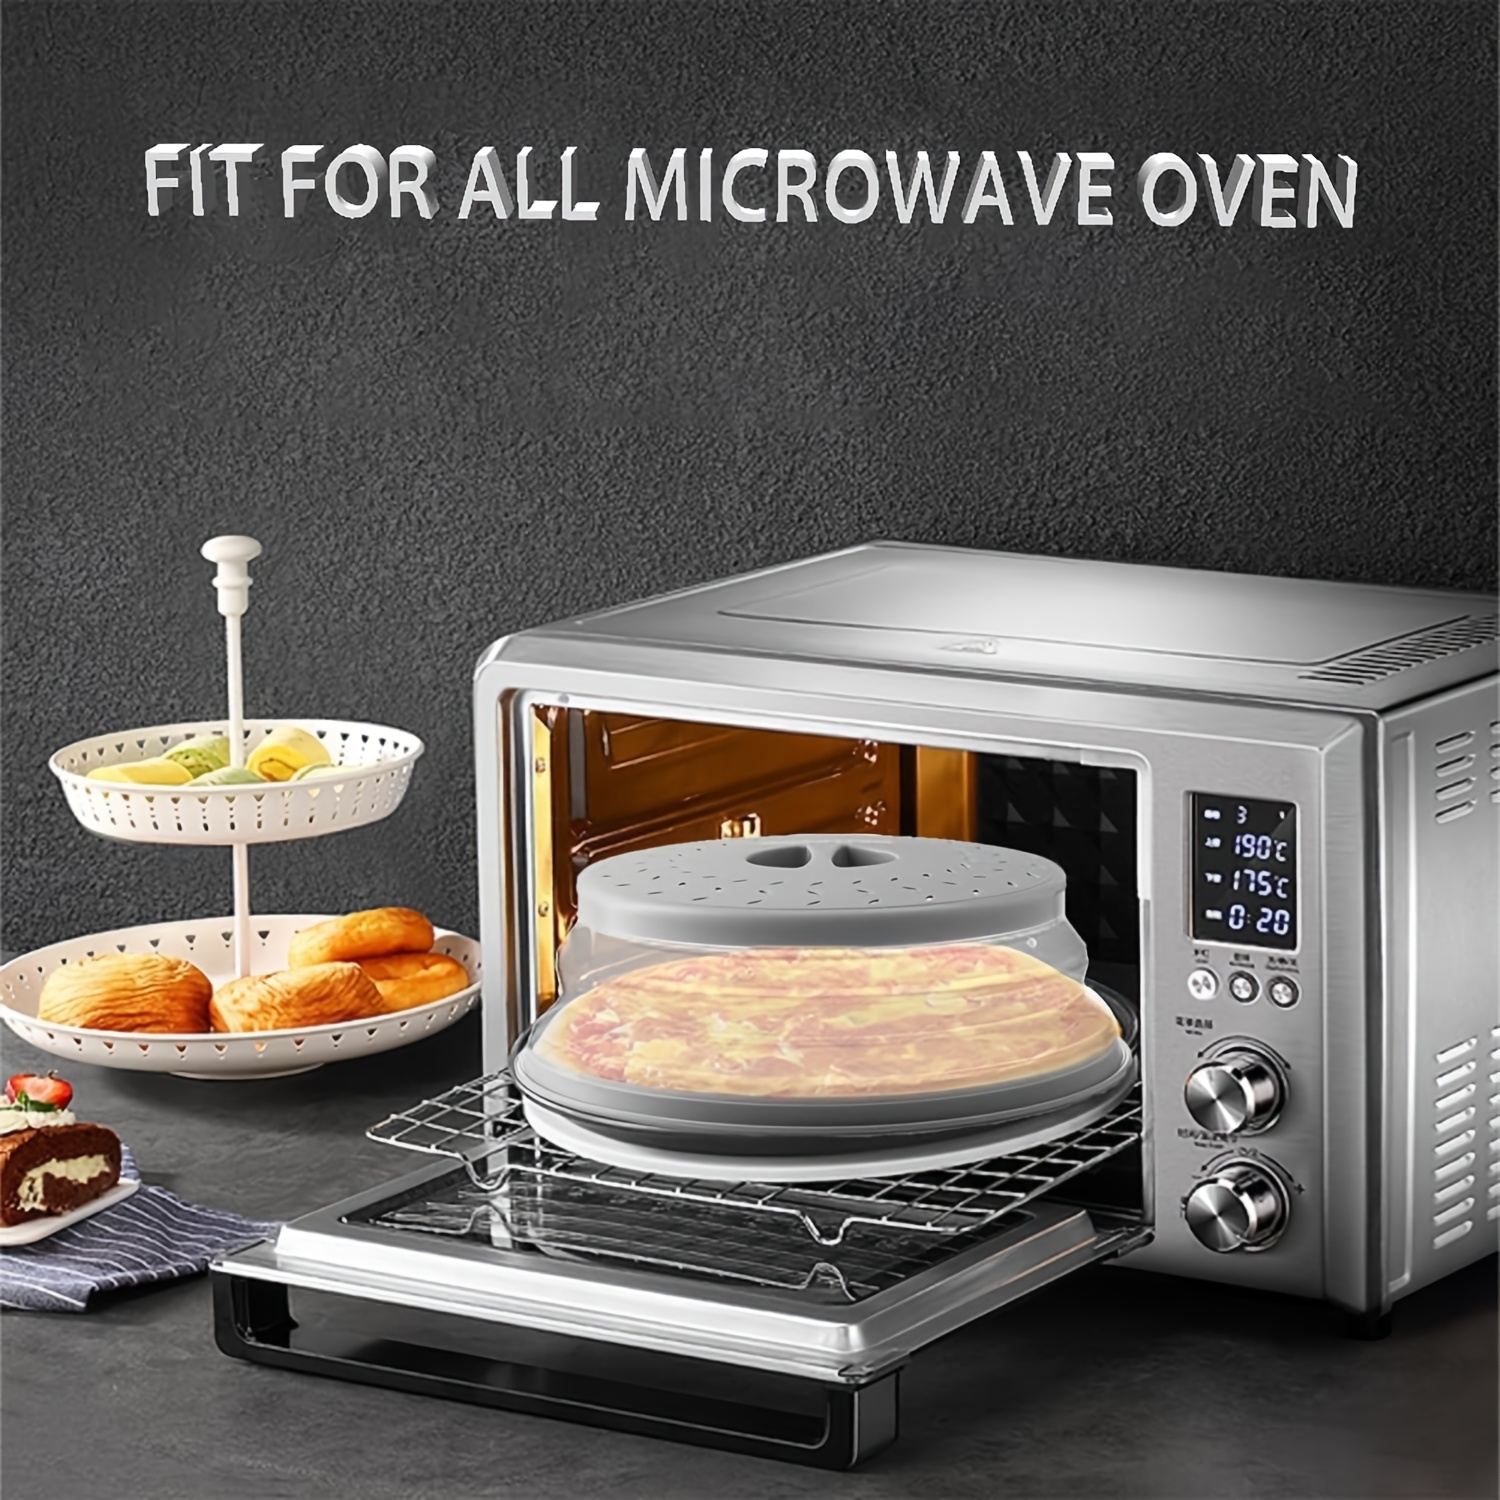 2 Microwave Plate Cover Lid 10 Plastic Safe Dish Splatter Topper Vent  Holes New